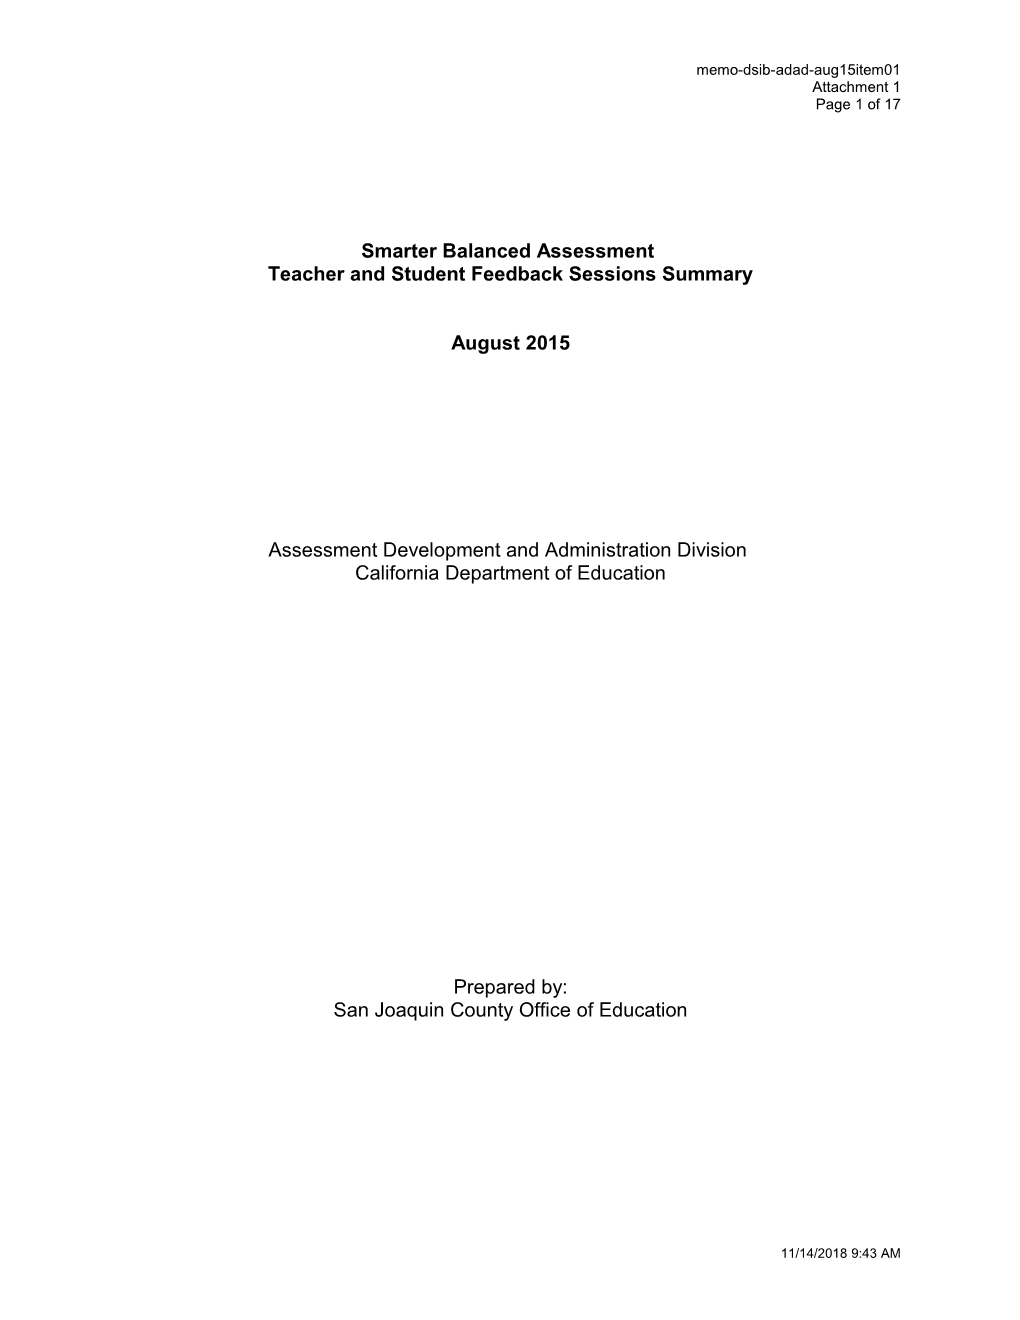 August 2015 Memo DSIB ADAD Item 01 - Information Memorandum (CA State Board of Education)